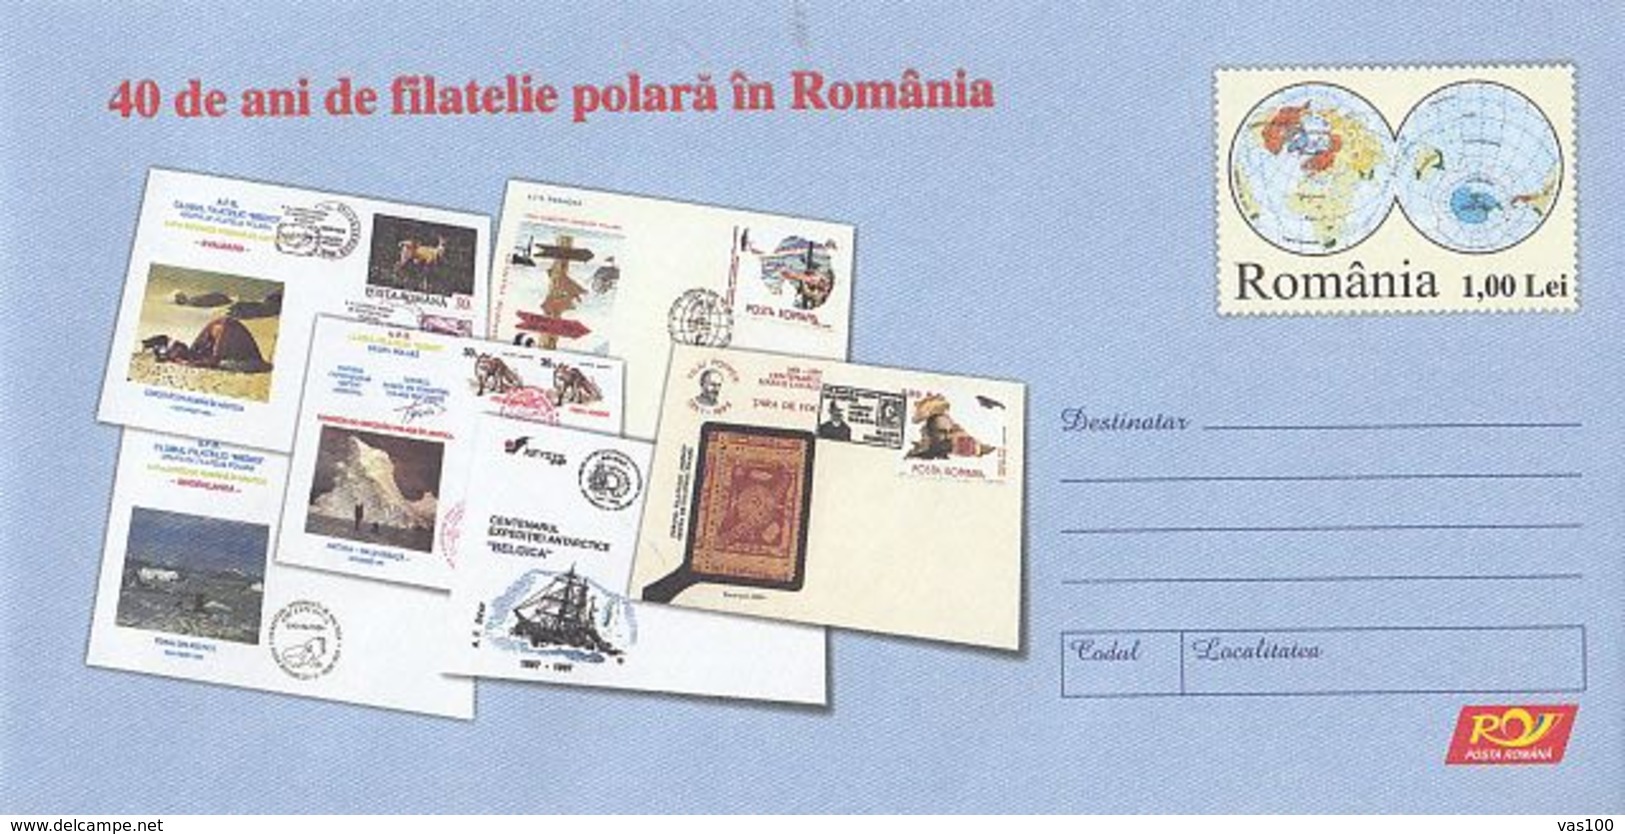 POLAR PHILATELY IN ROMANIA, PHILATELIC EXHIBITIONS, COVER STATIONERY, ENTIER POSTAL, 2008, ROMANIA - Événements & Commémorations